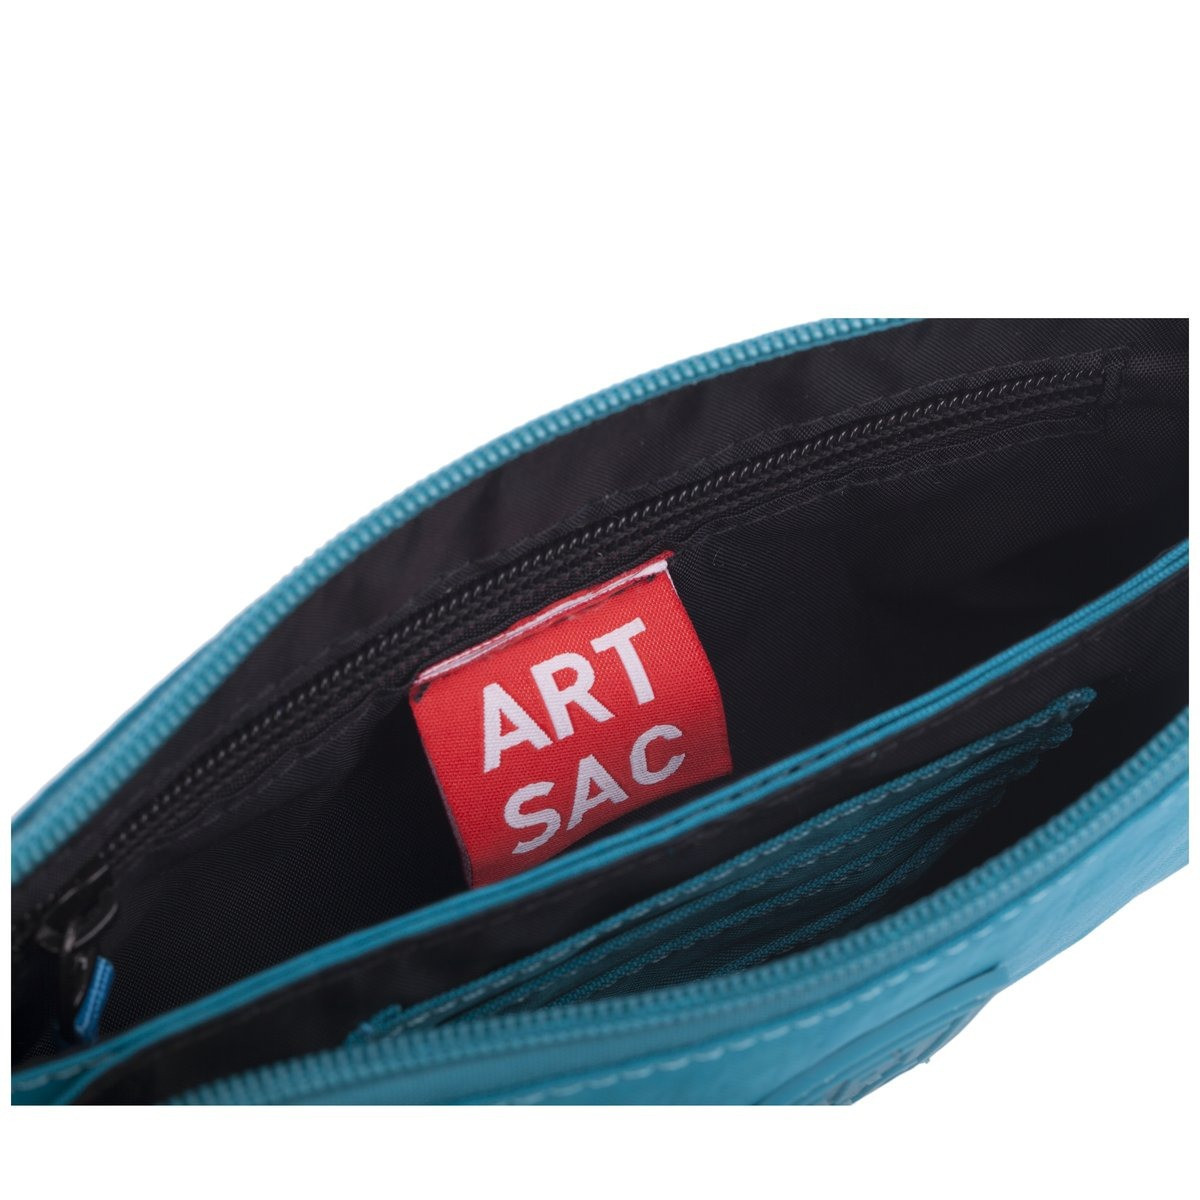 Artsac Zip Top - Wrist Strapped Purse / Case